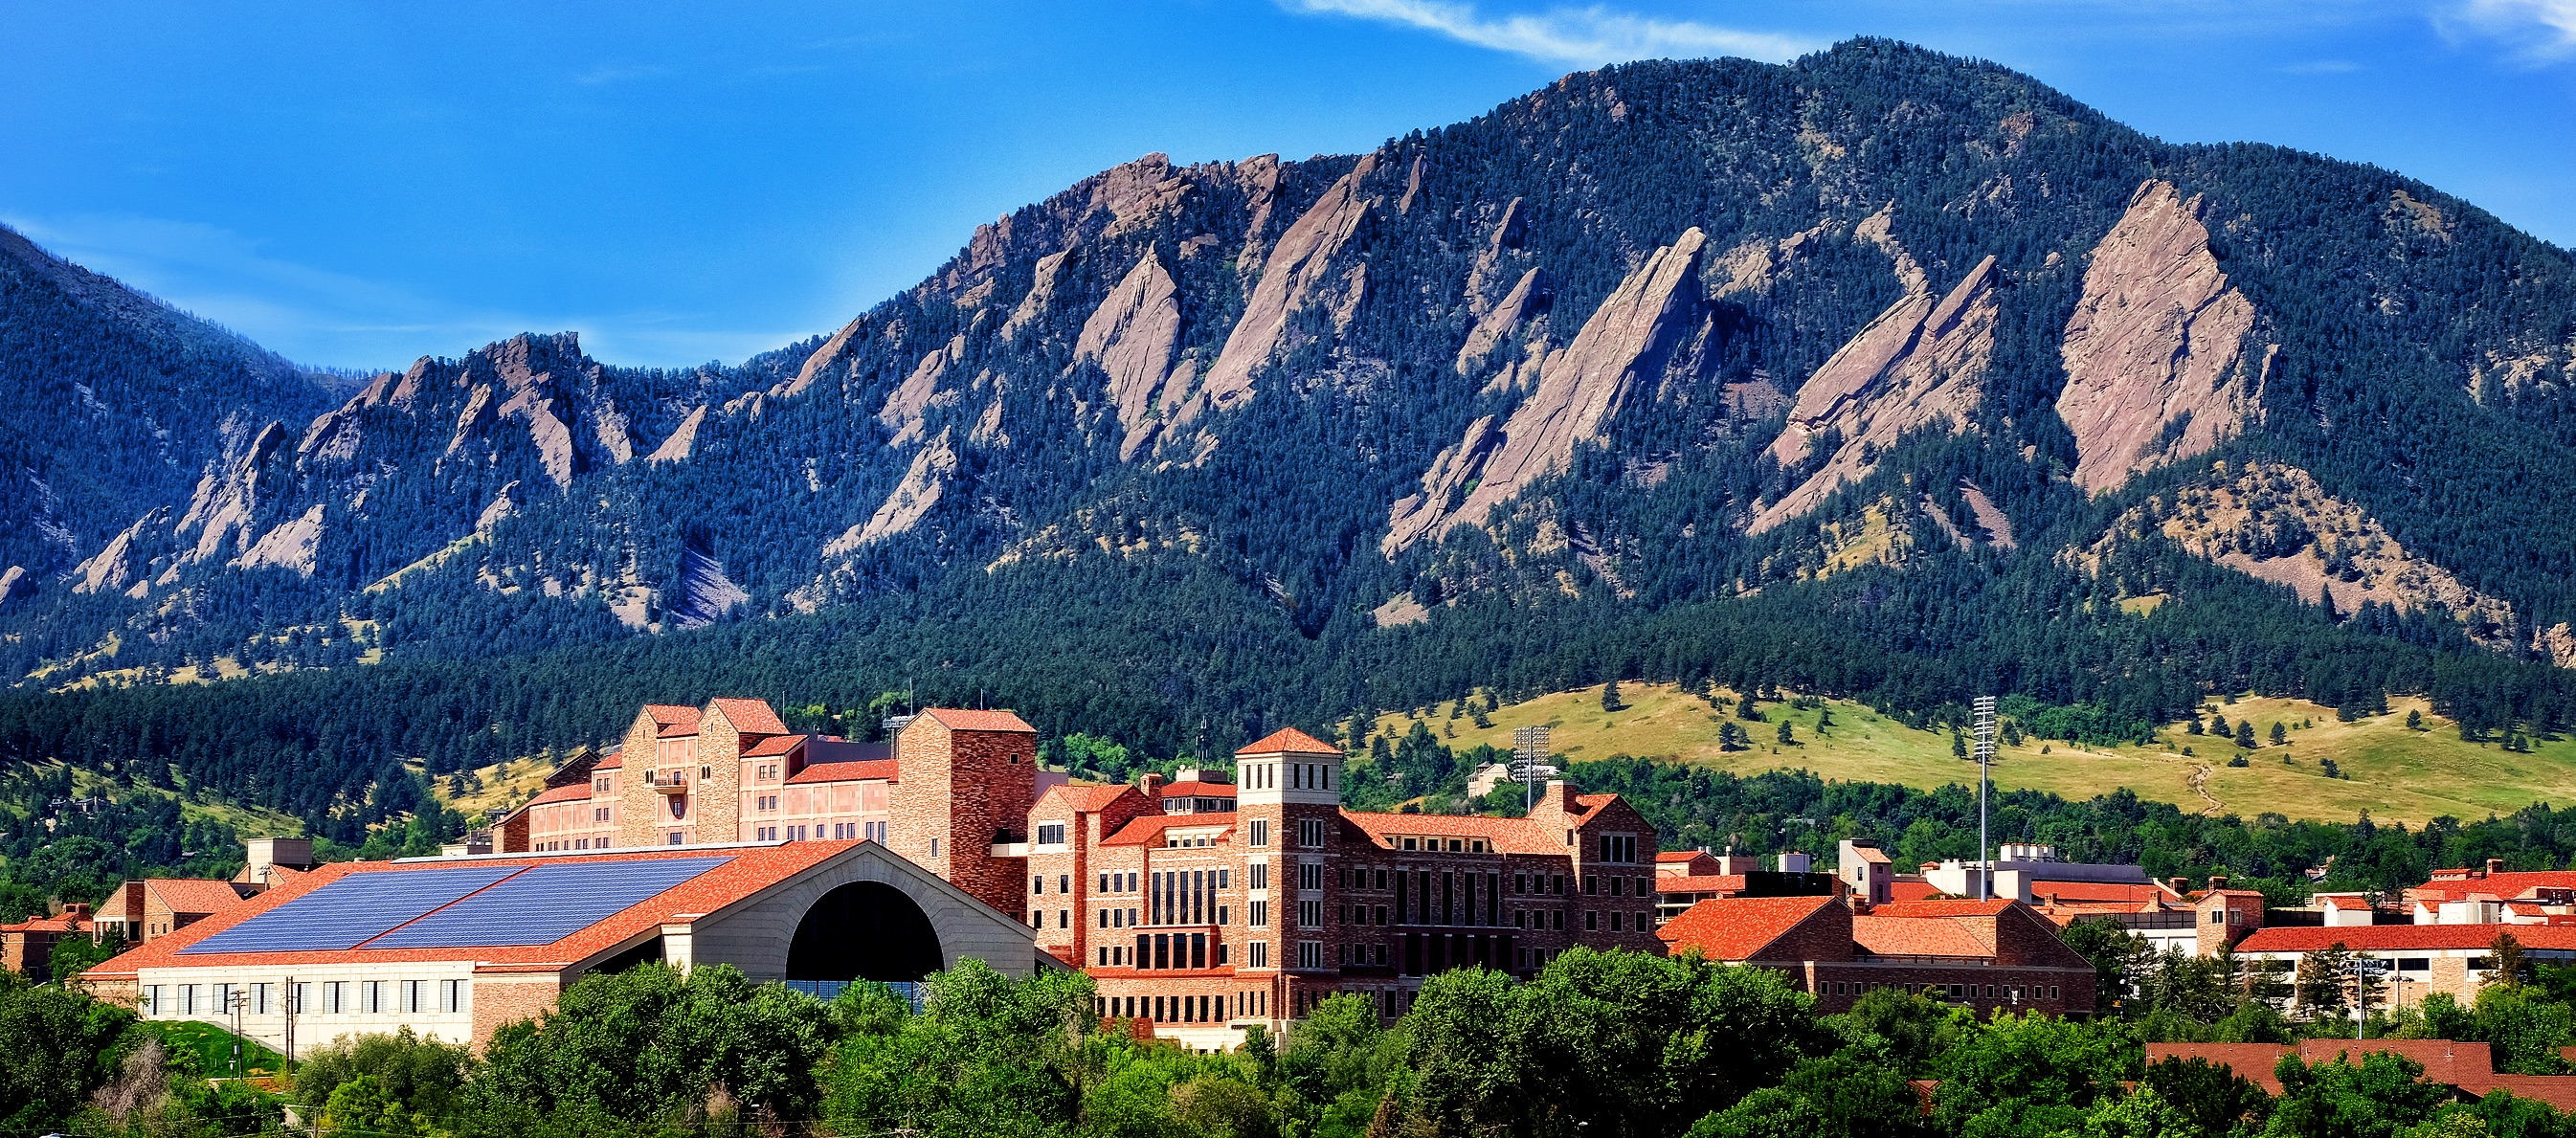 Office 365  University of Colorado Boulder